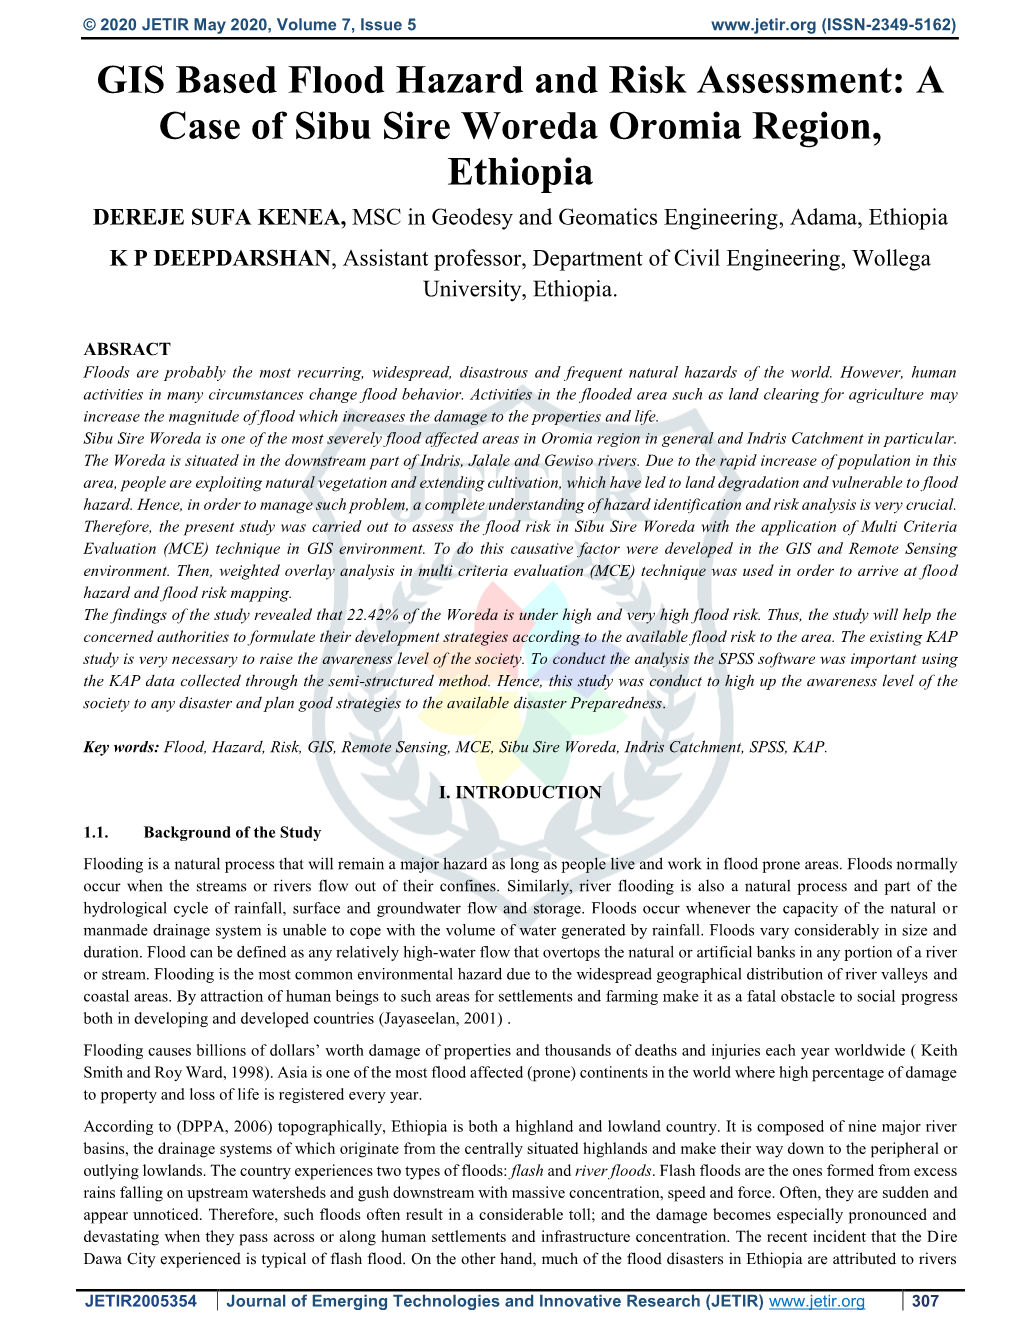 GIS Based Flood Hazard and Risk Assessment: a Case of Sibu Sire Woreda, Oromia Region, Ethiopia